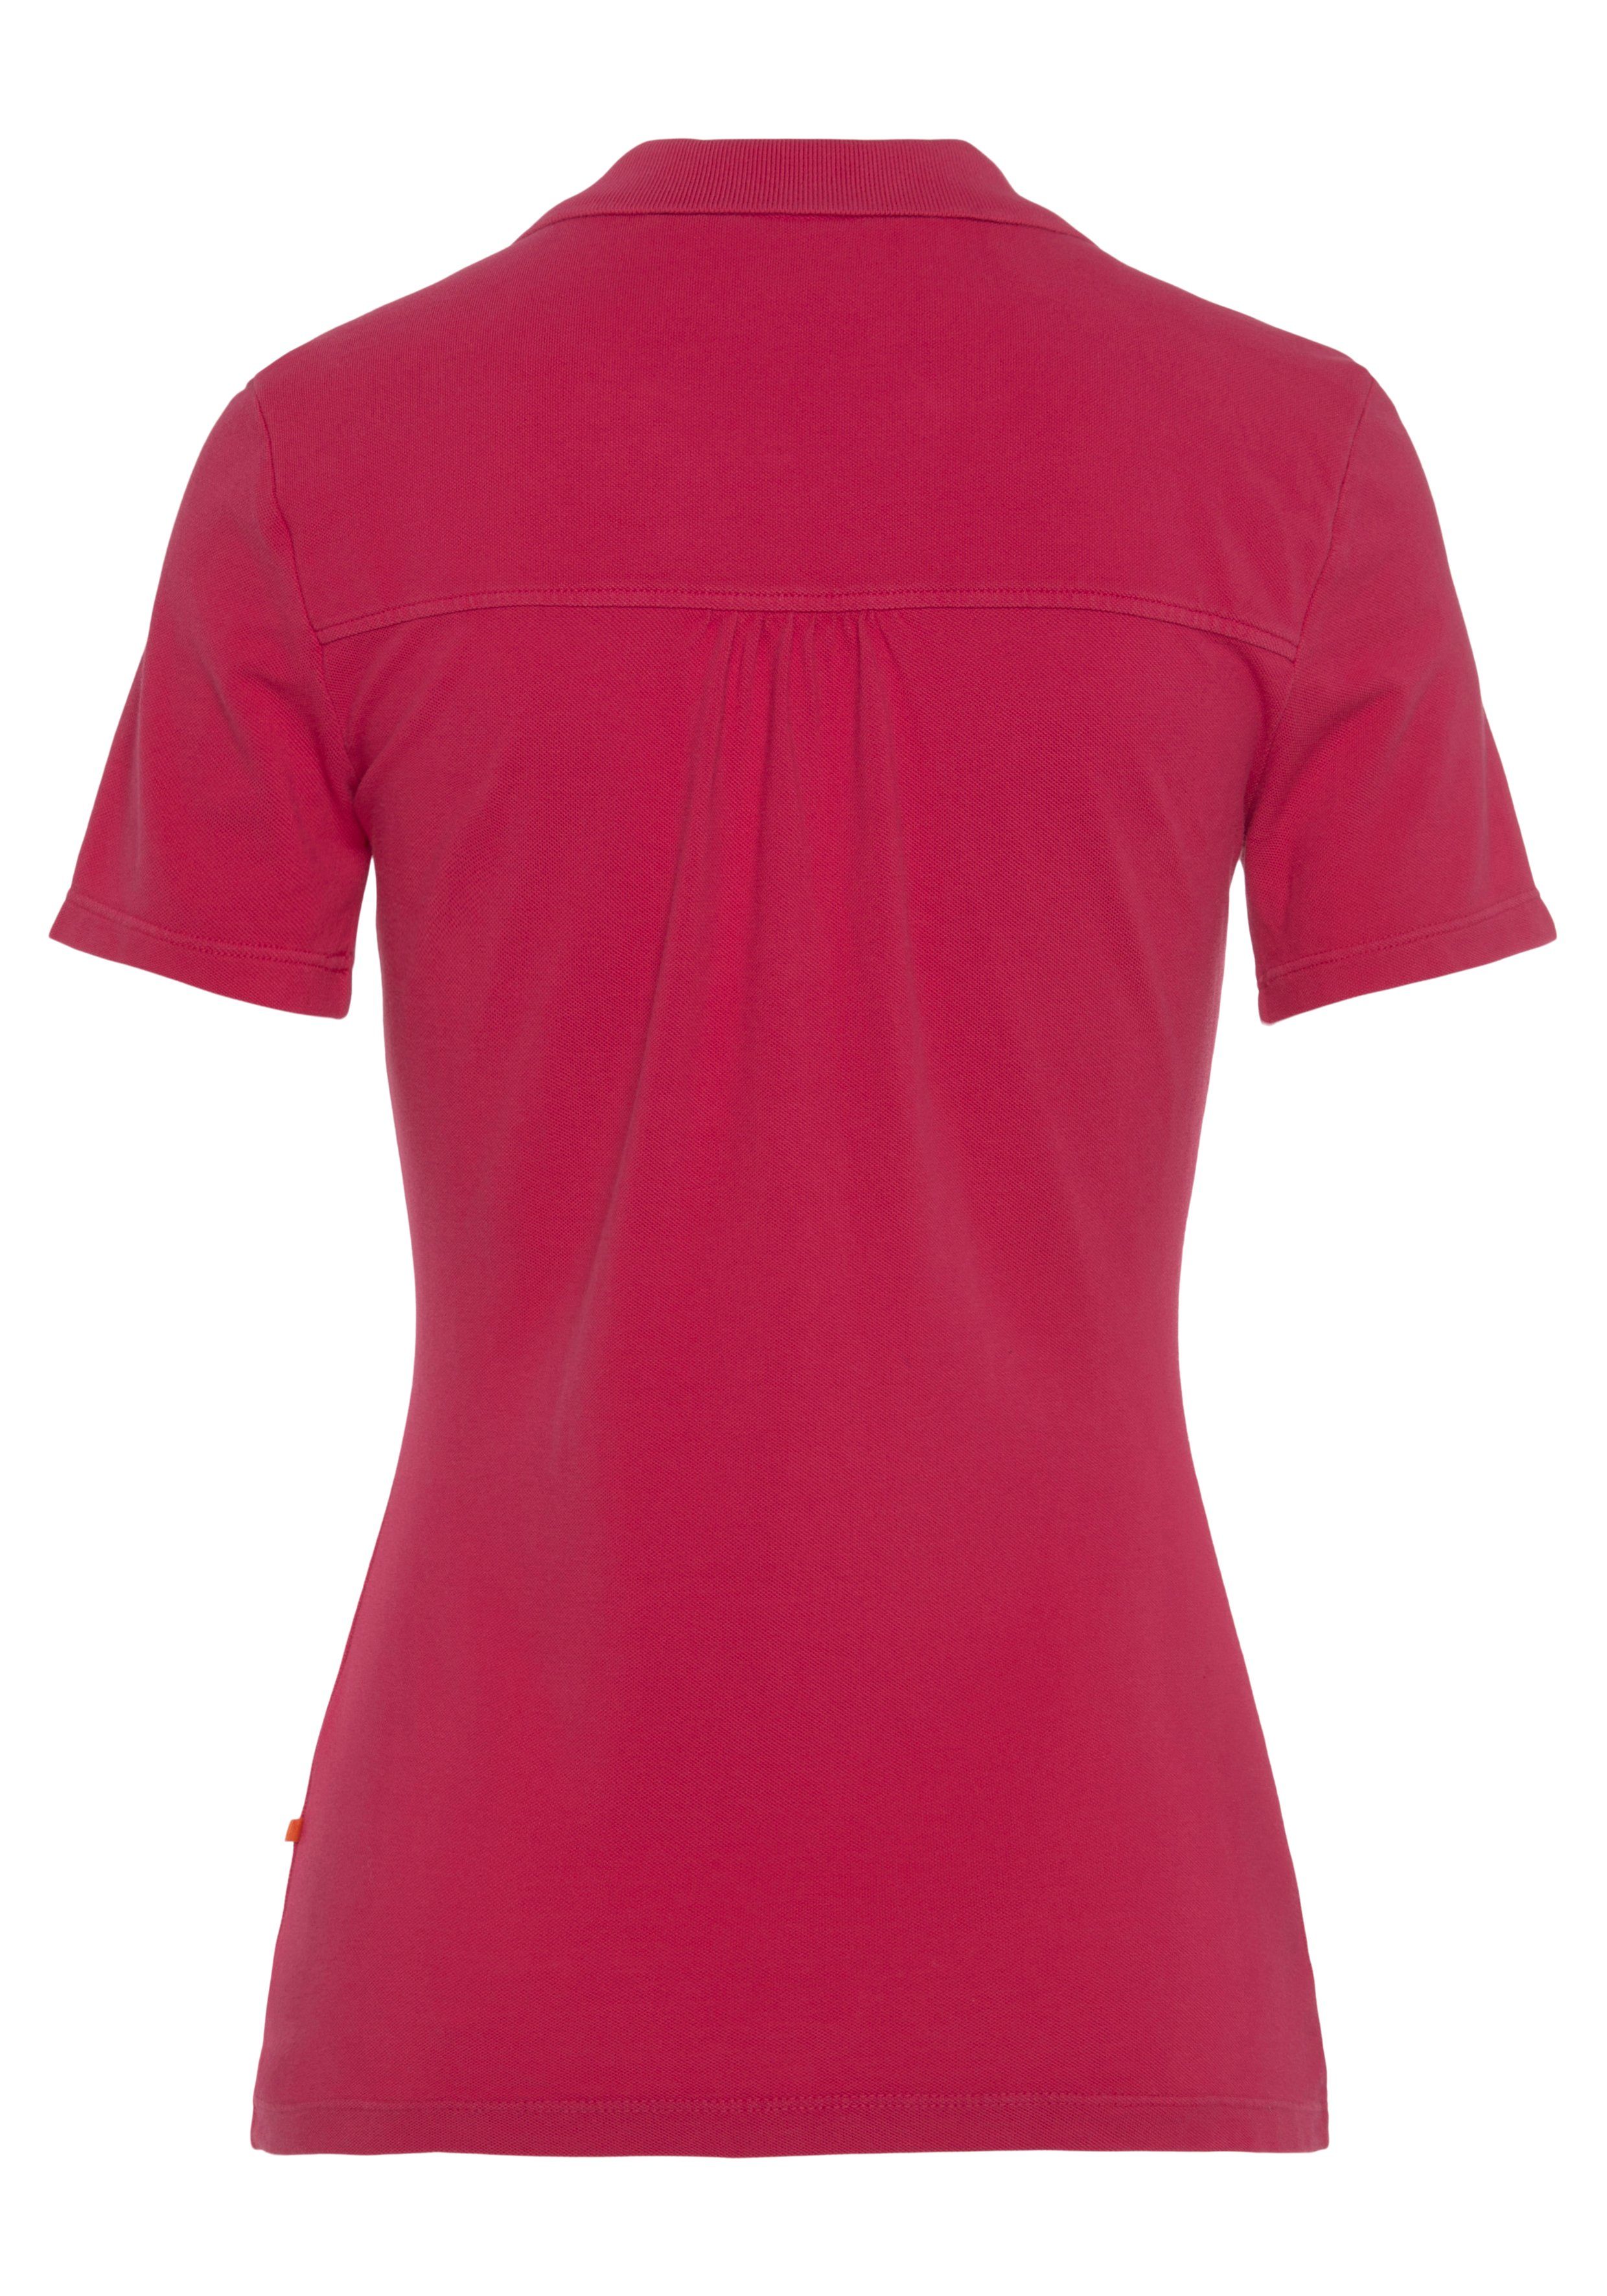 ORANGE linken medium_pink Blusenshirt der Brust an mit BOSS Labelstickerei